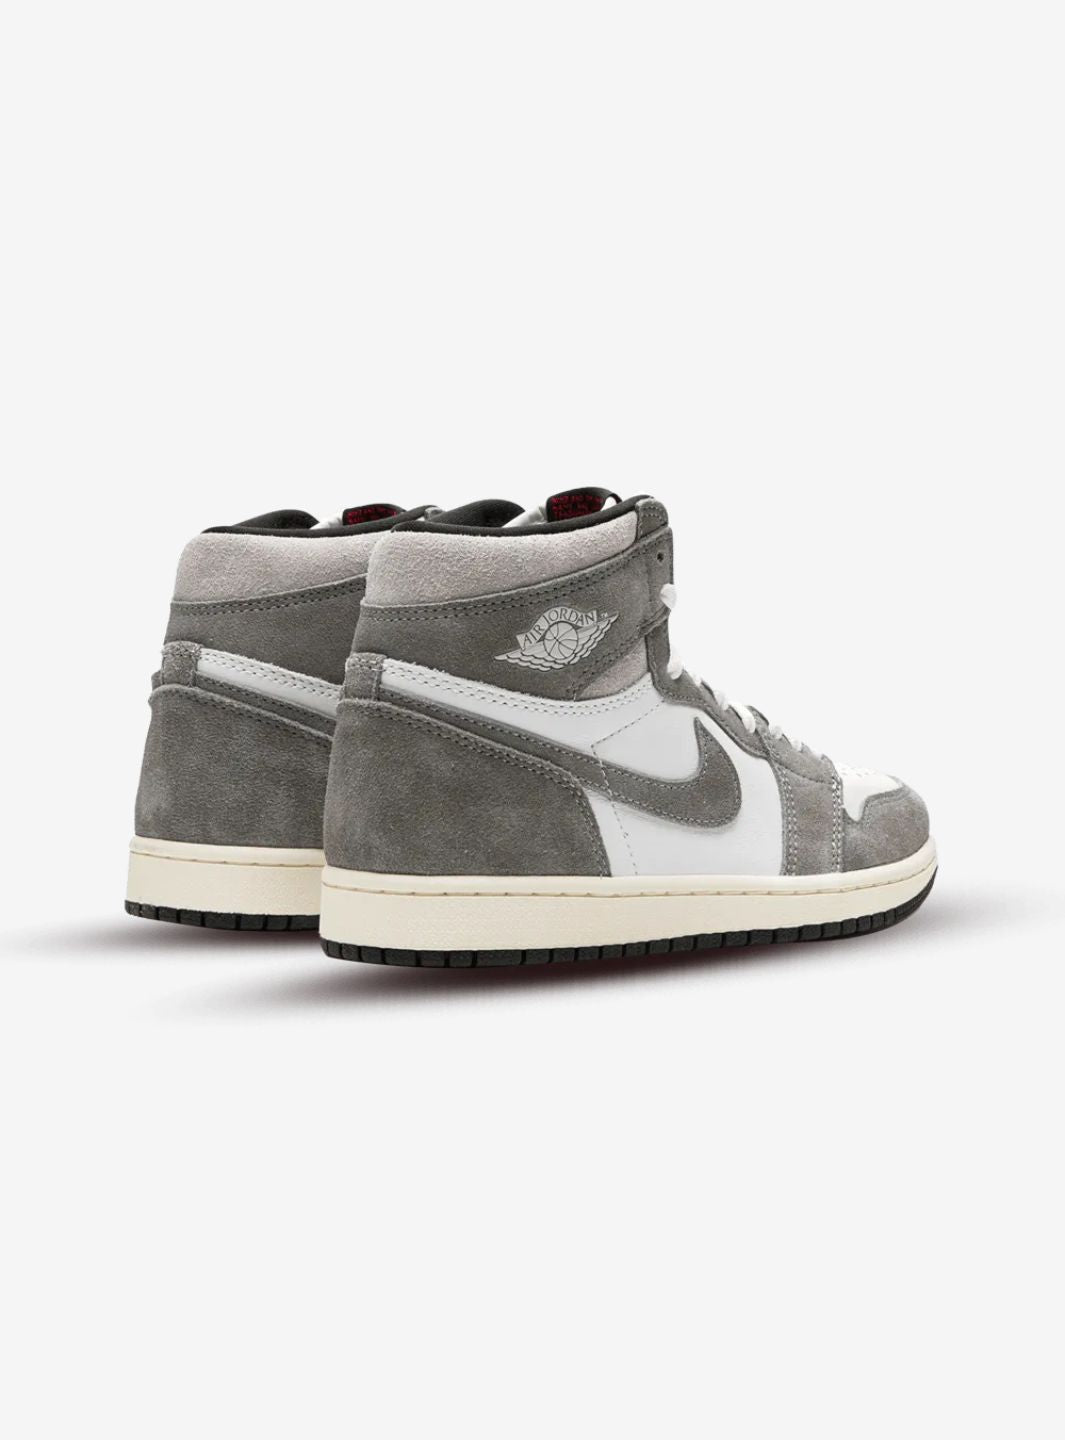 Jordan 1 High Washed Grey